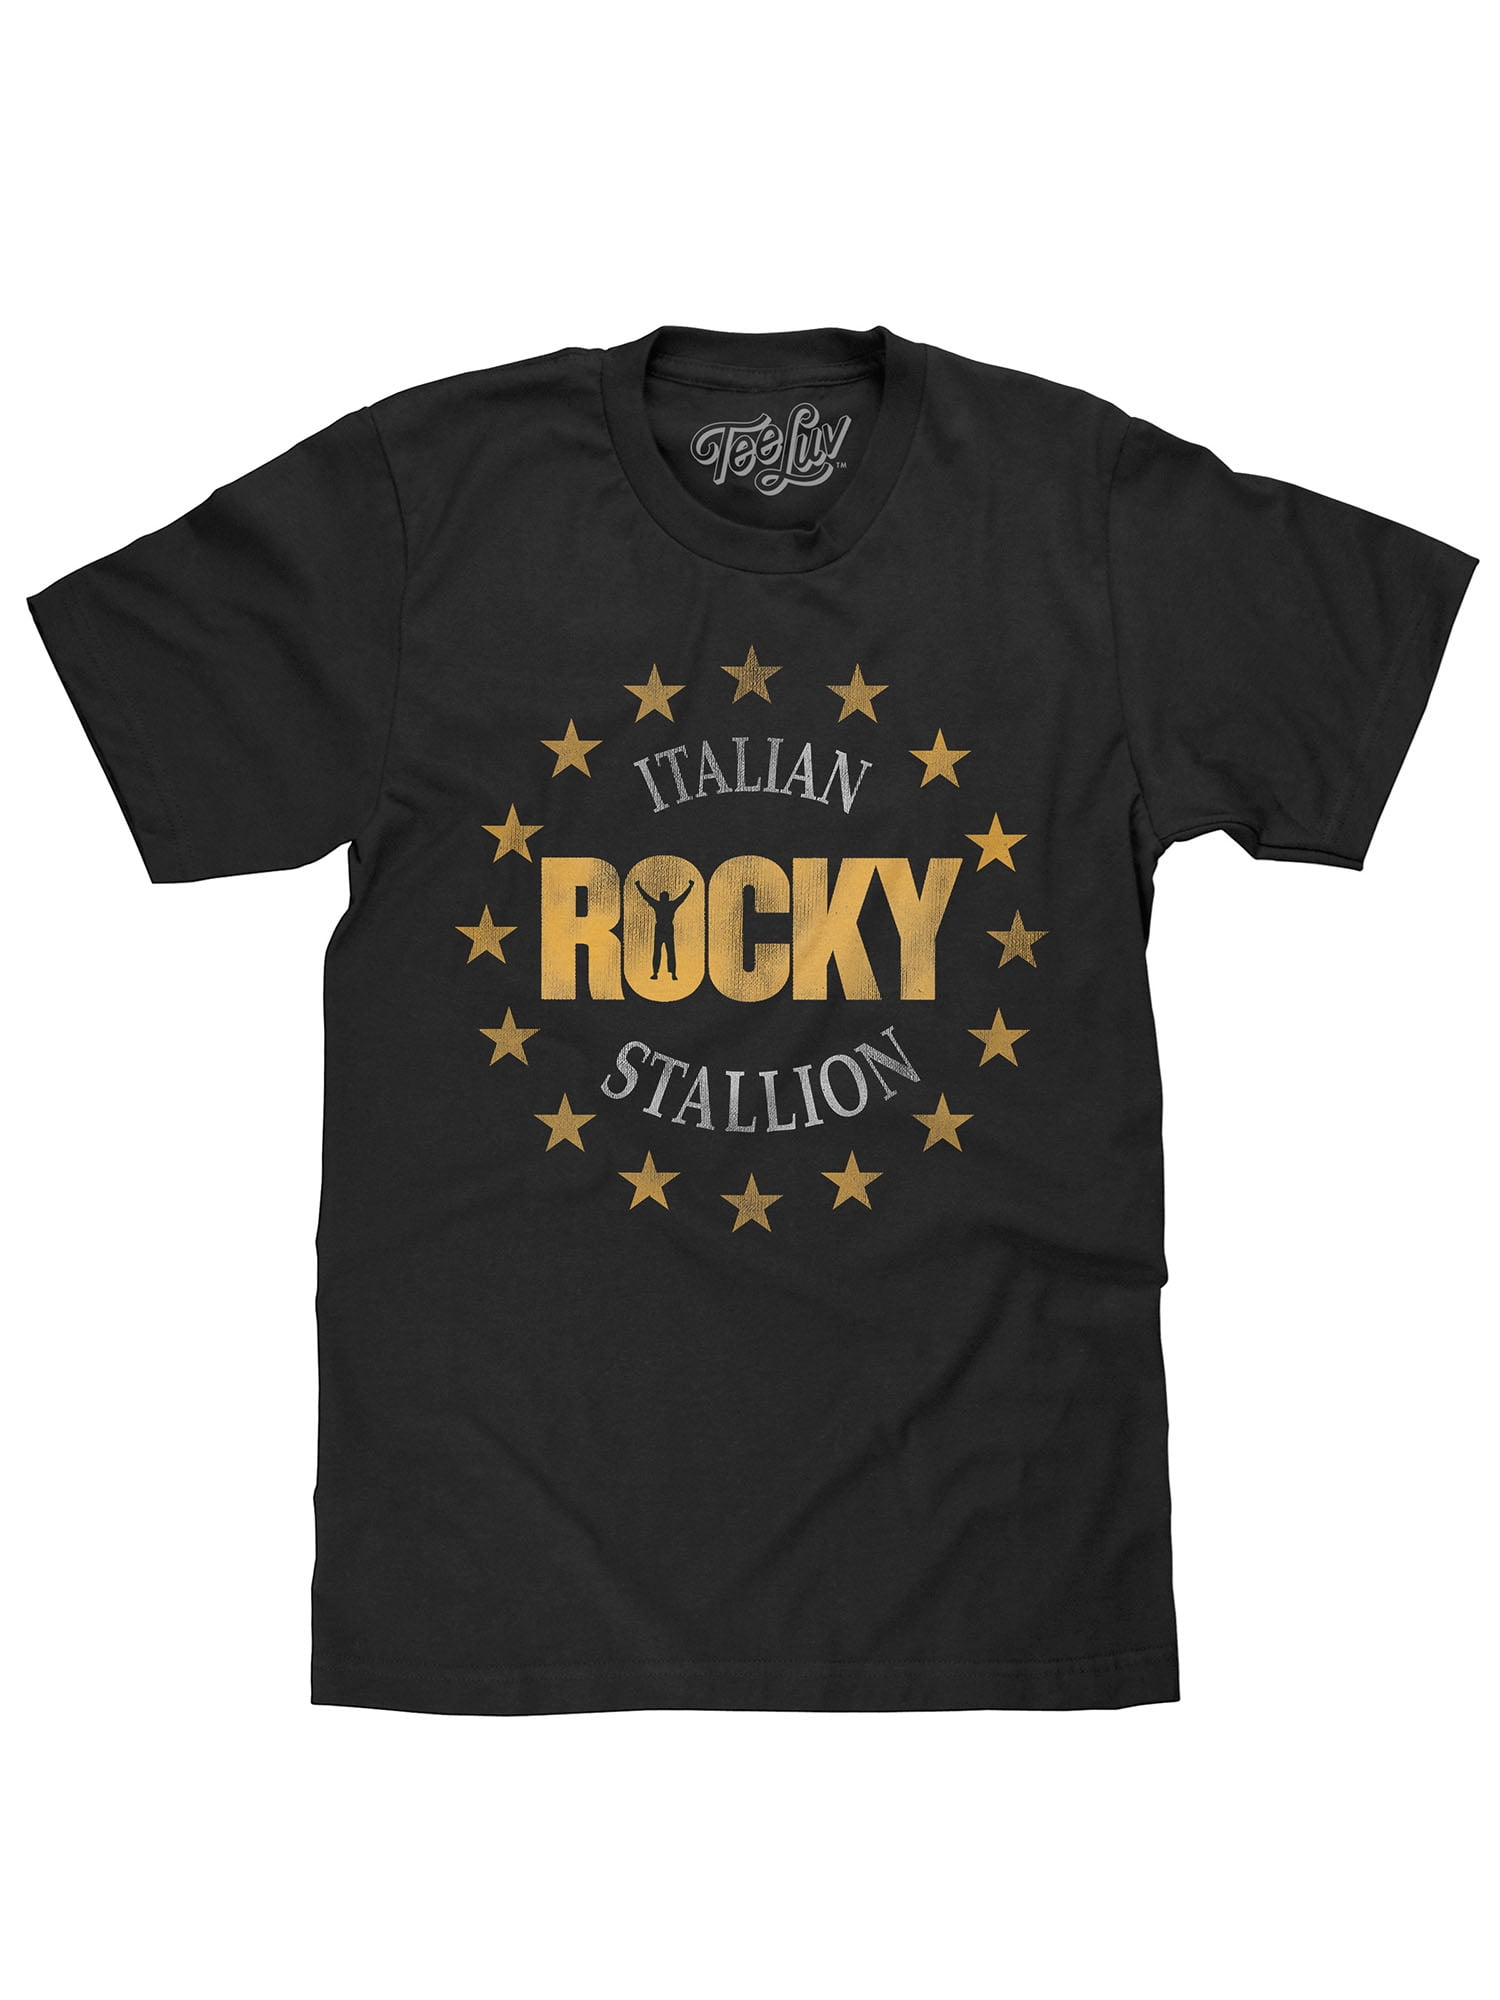 ROCKY STALLION GIRLIE T SHIRT Boxing Fan Club Italian Balboa 